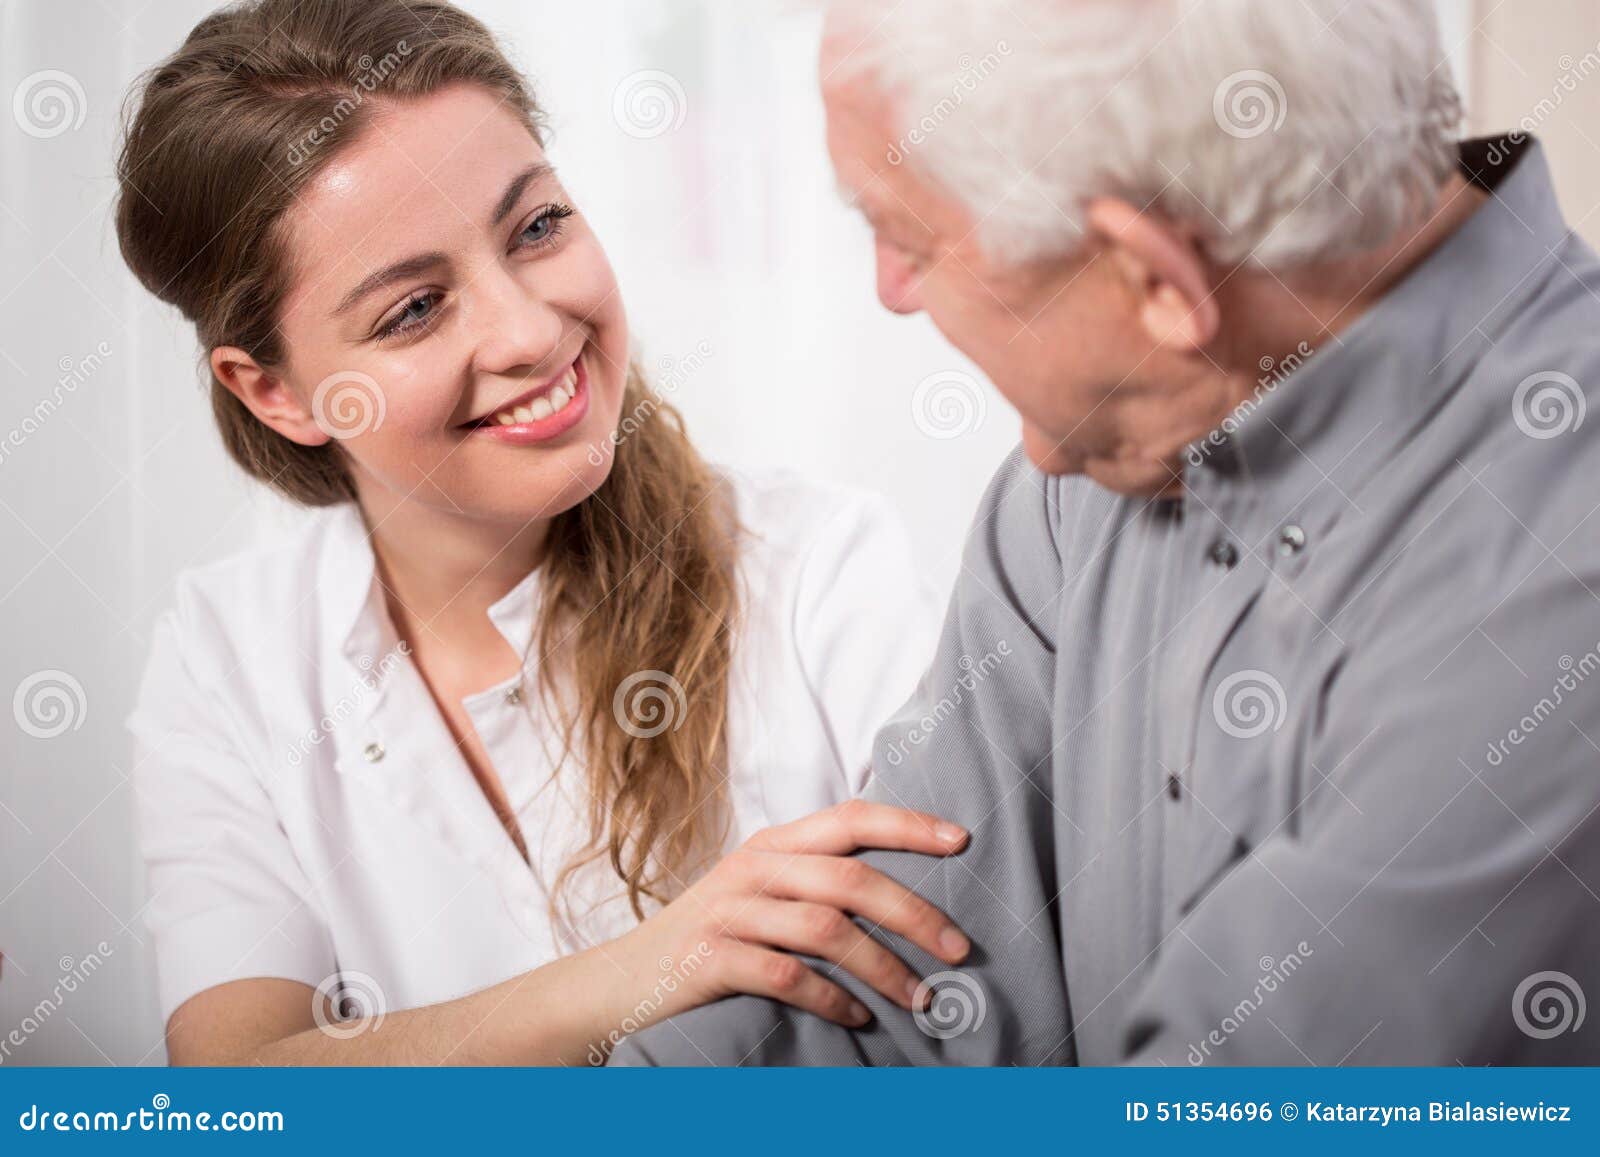 smiling nurse assisting senior man